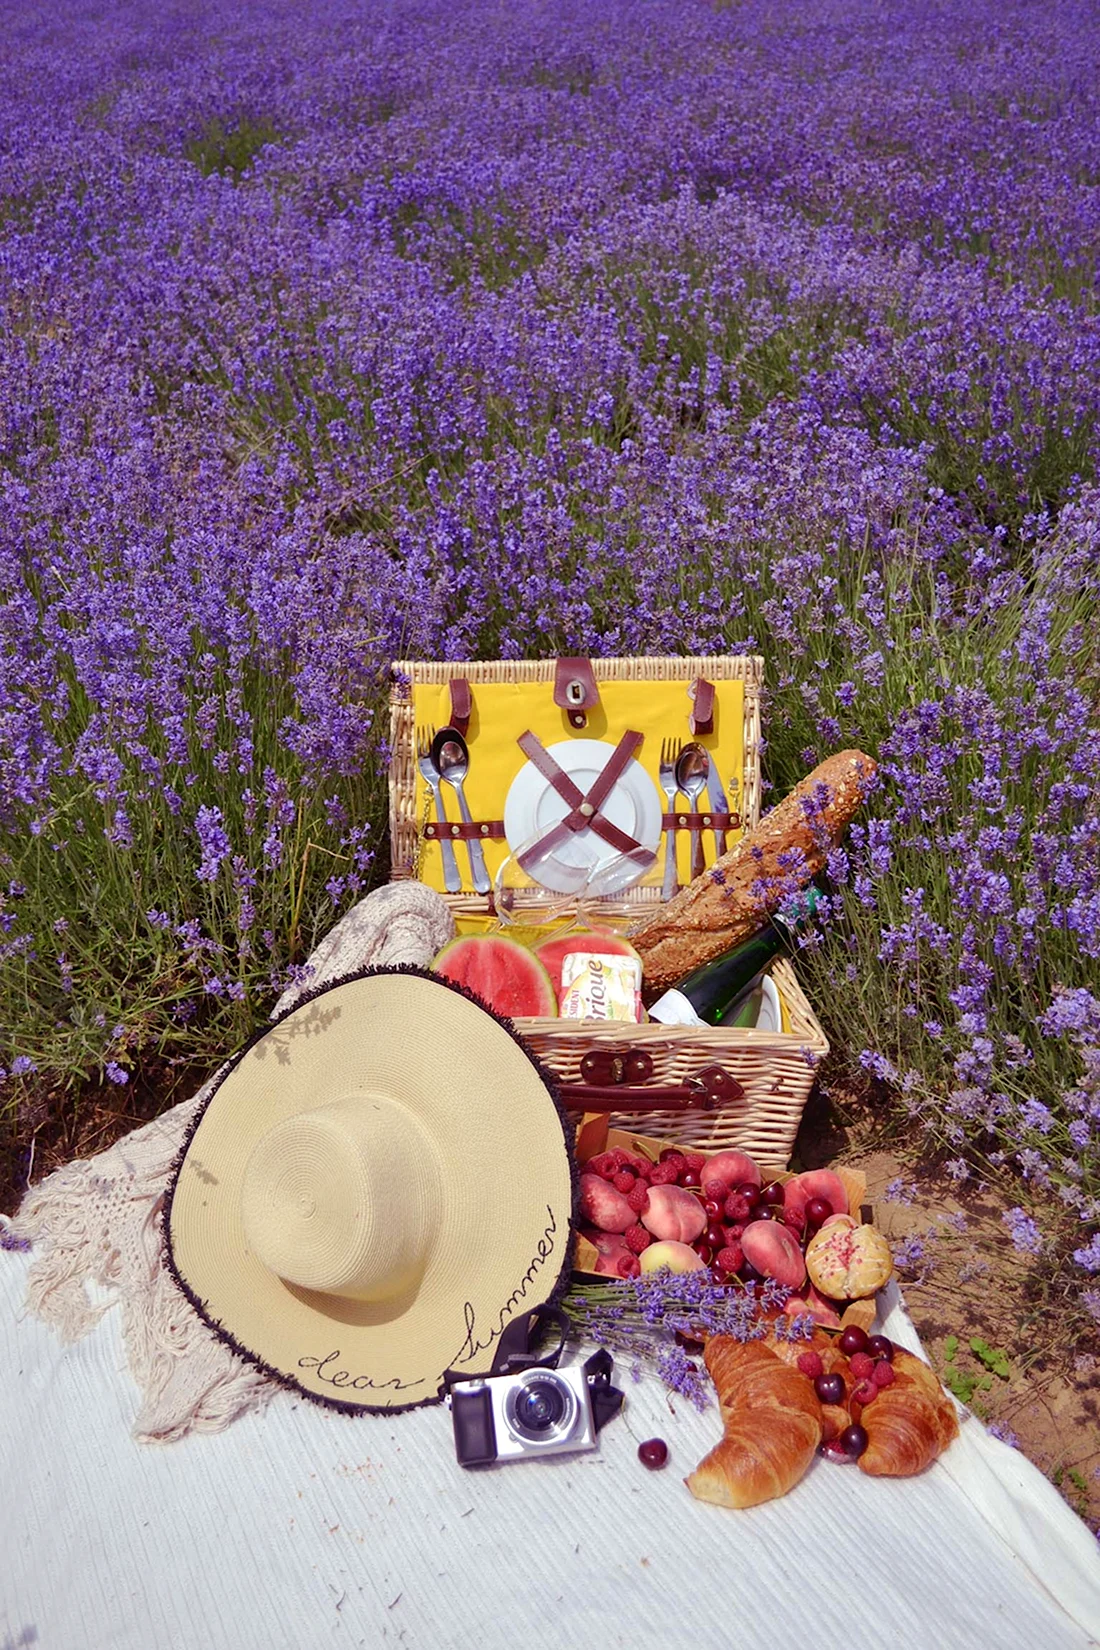 Франция пикник на лавандовом поле